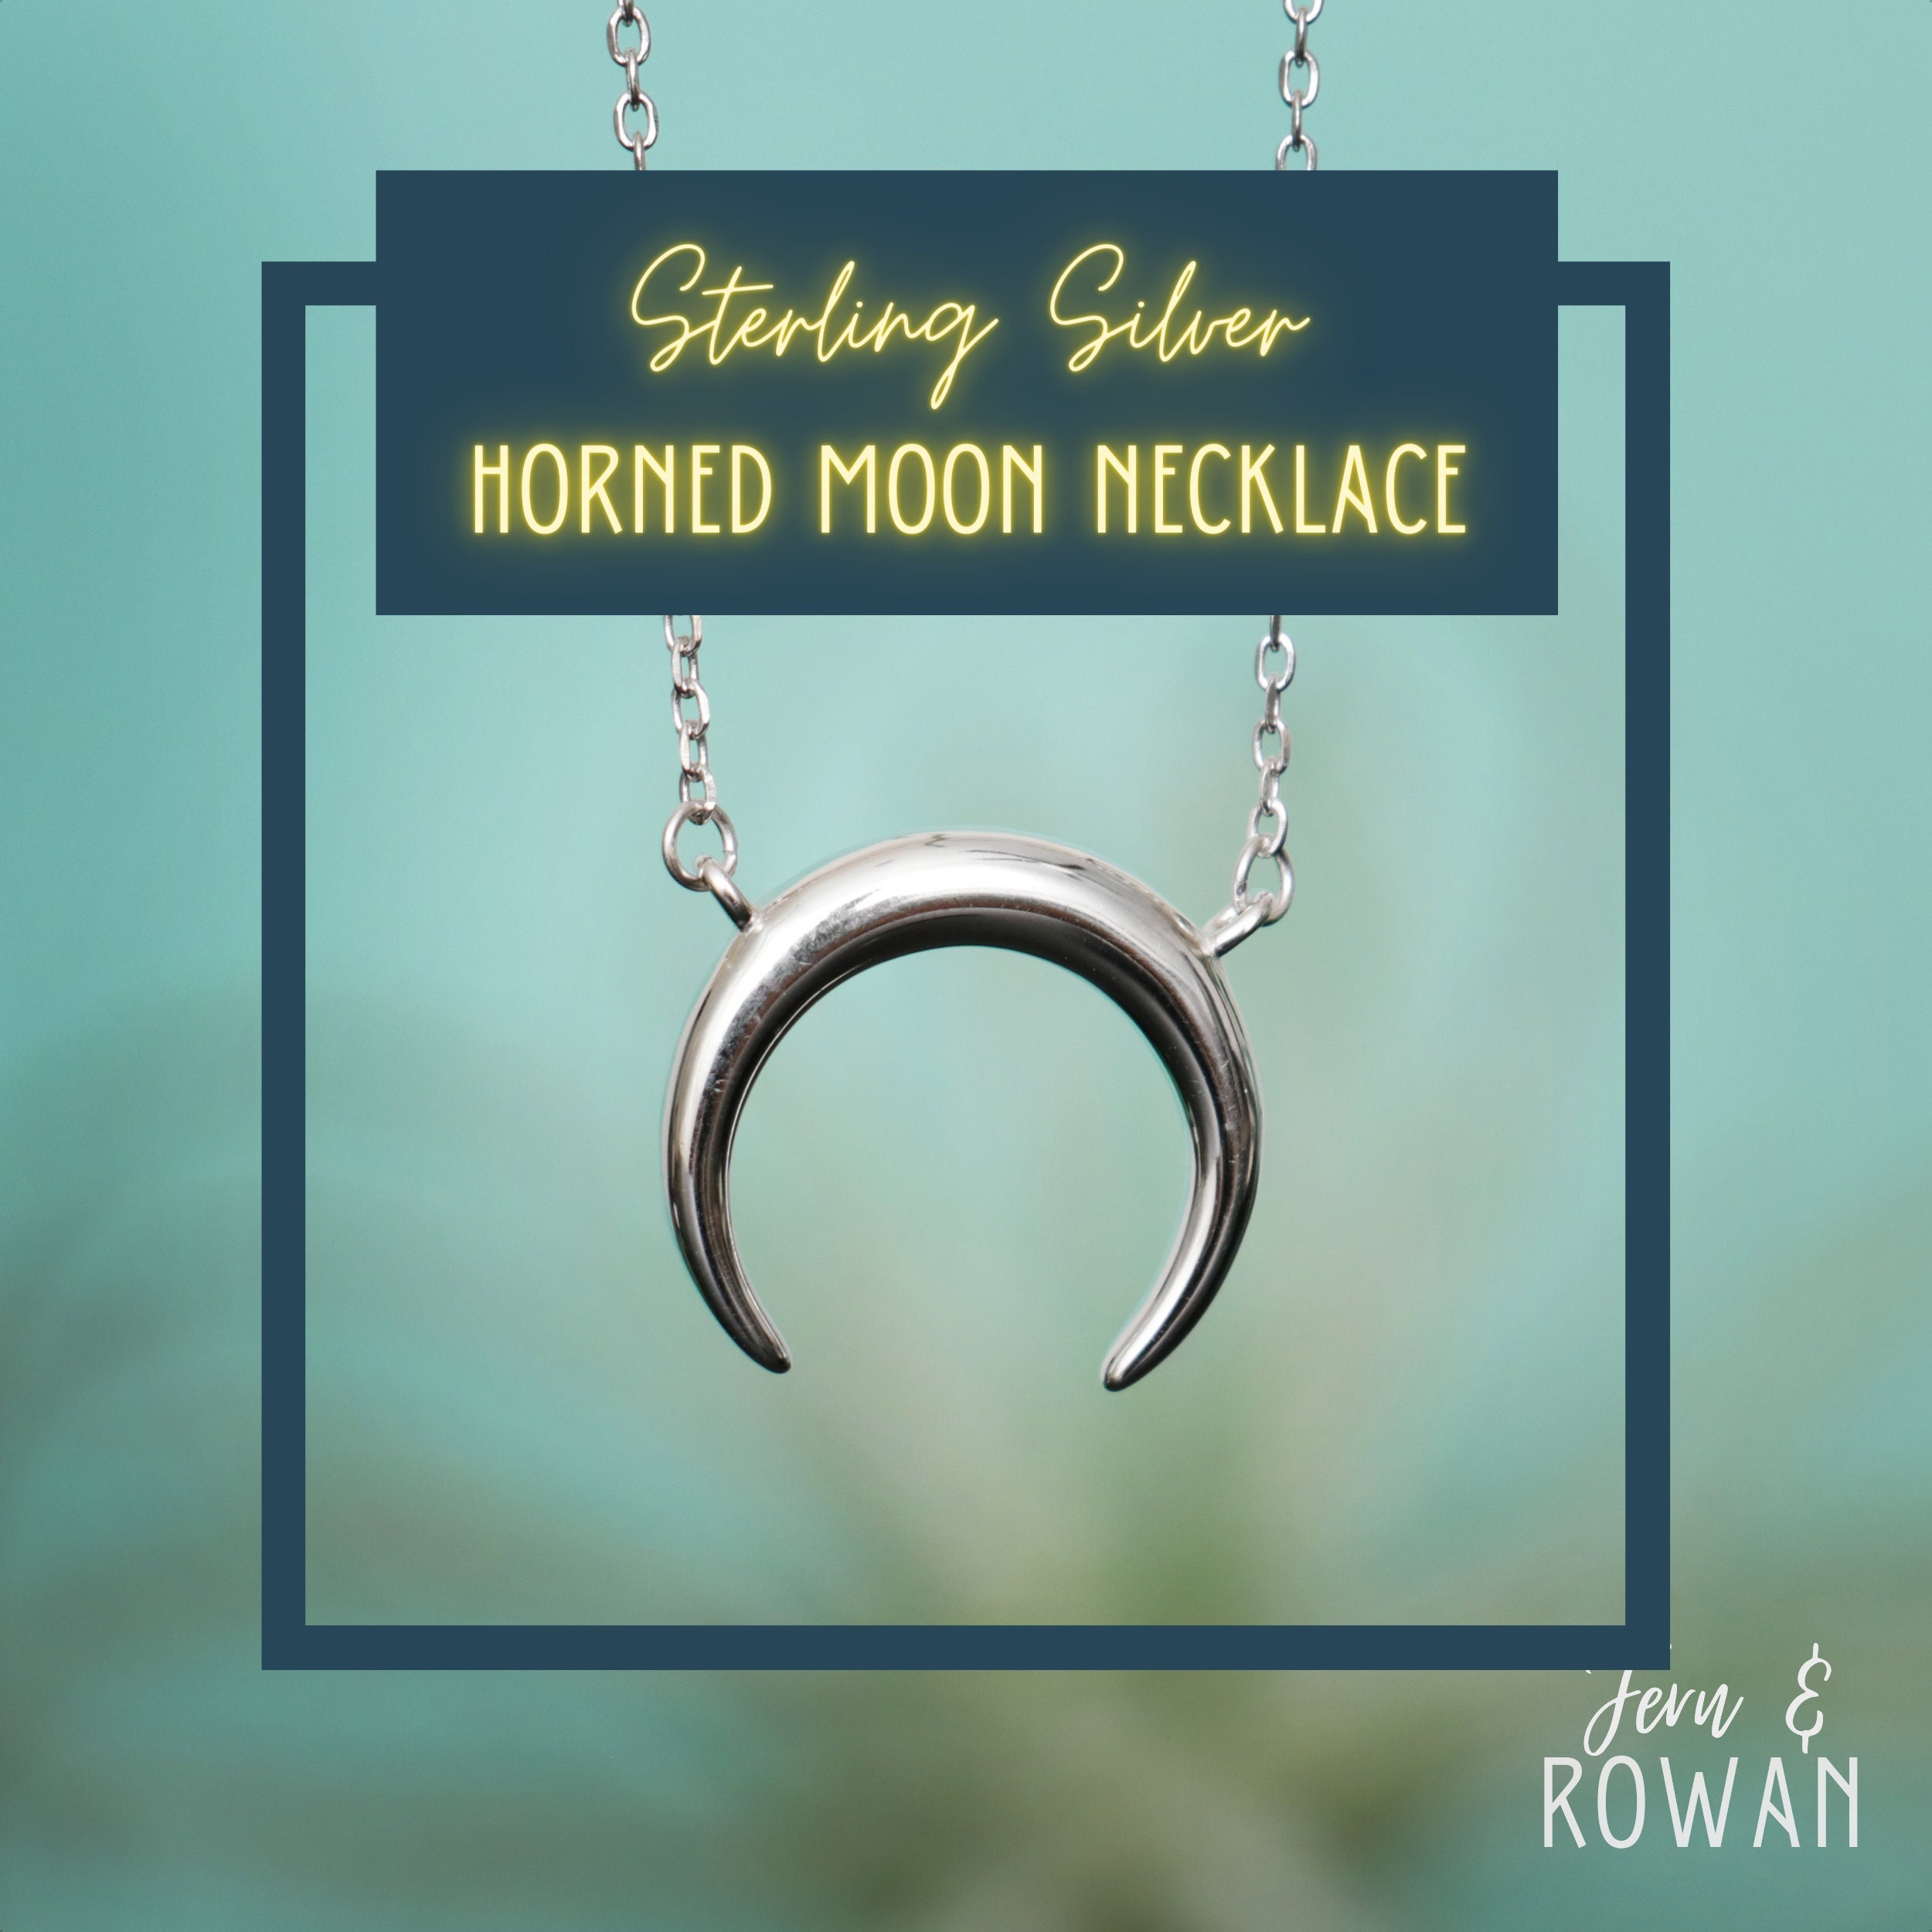 Rowan' Upside Down Crescent Moon Double Horn Stainless Steel